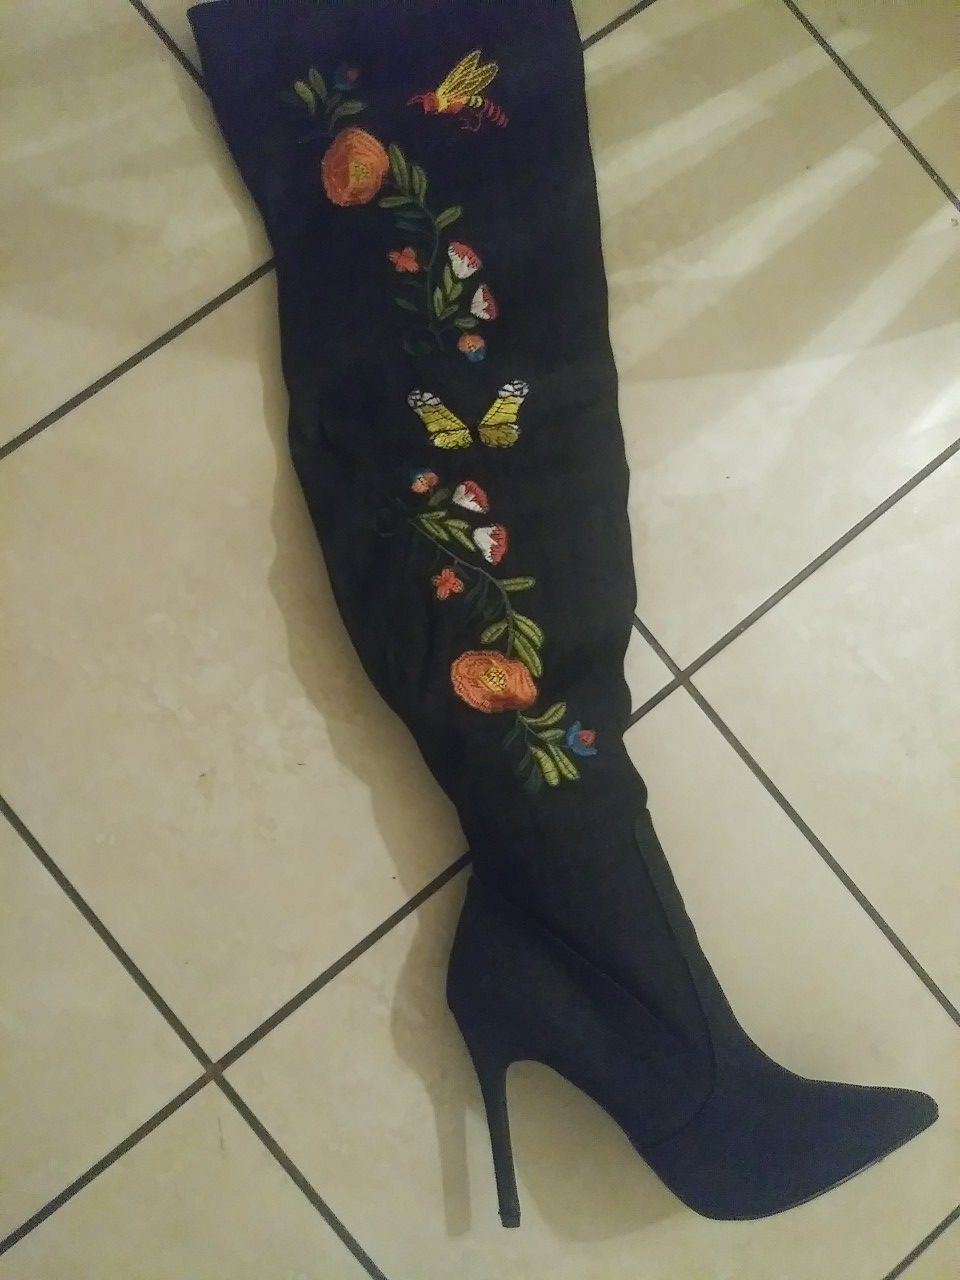 Blue/Black Denim 3inch heel boot. Beautiful Embroidery. Size 9